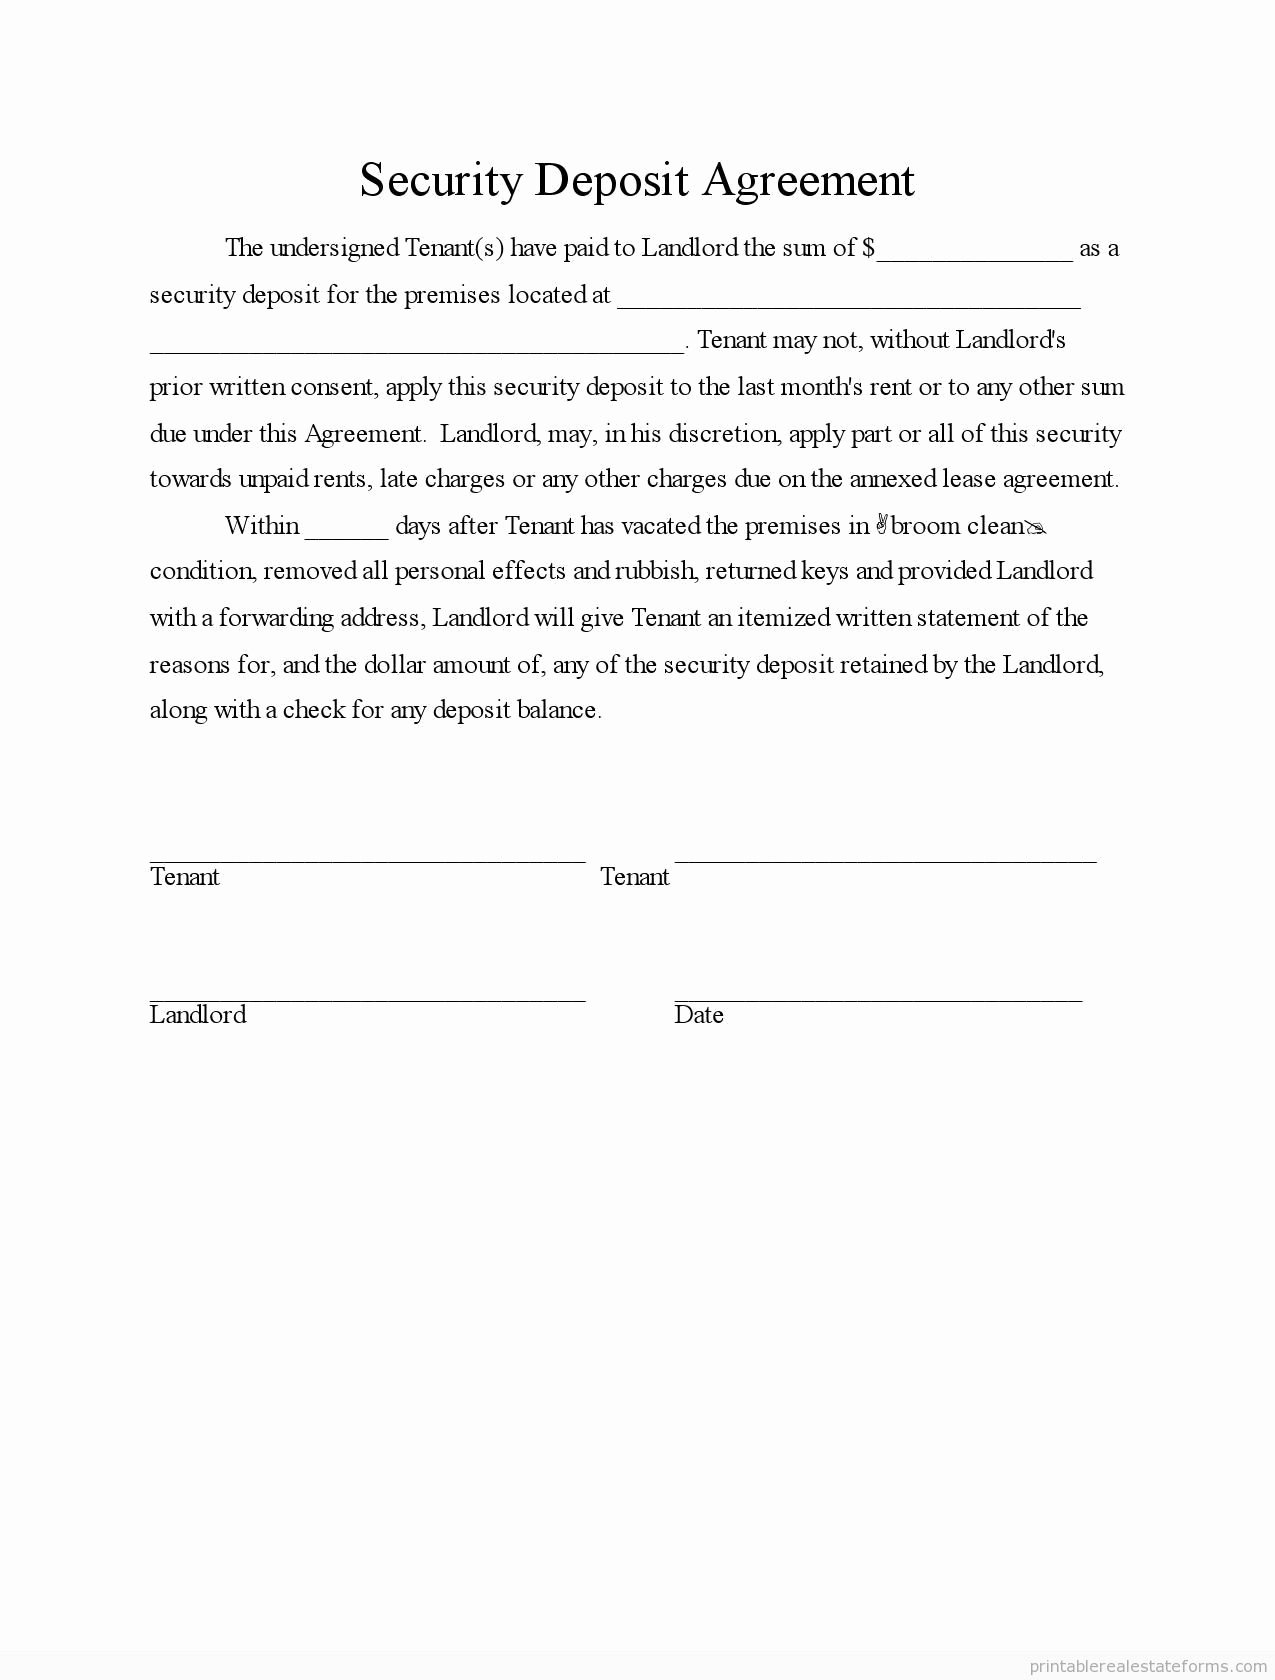 Sample Printable Security Deposit Agreement form